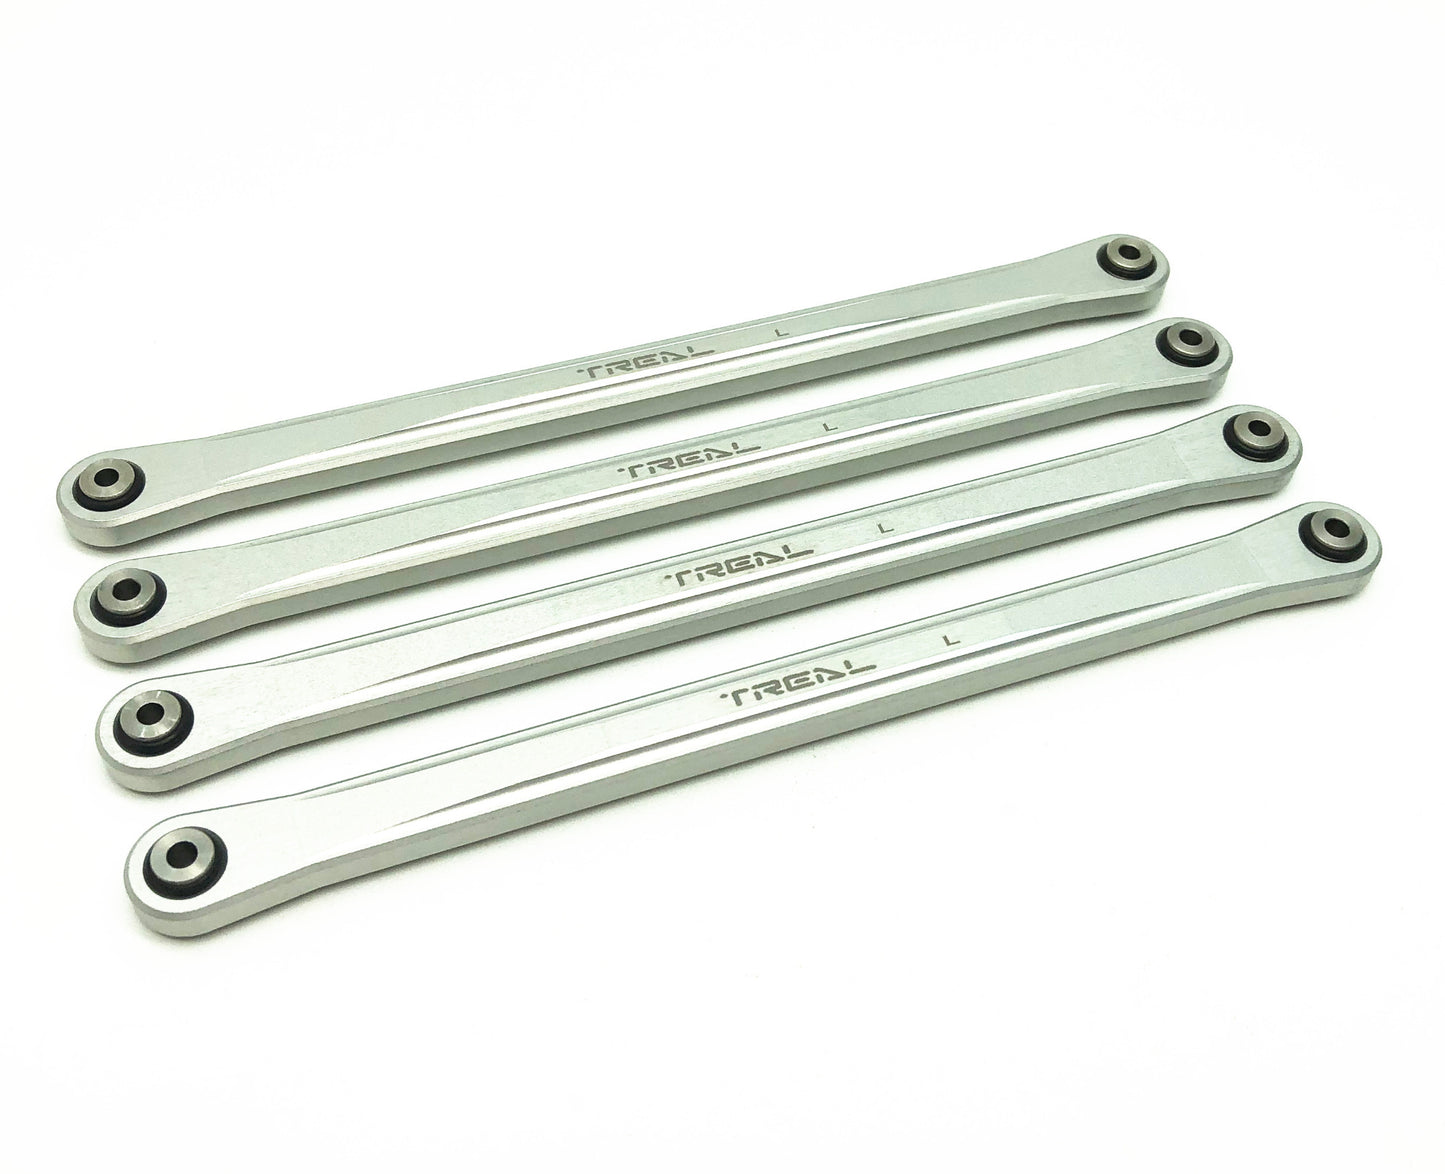 Treal Aluminum 7075 Lower Link Bars (4) Set for Losi LMT